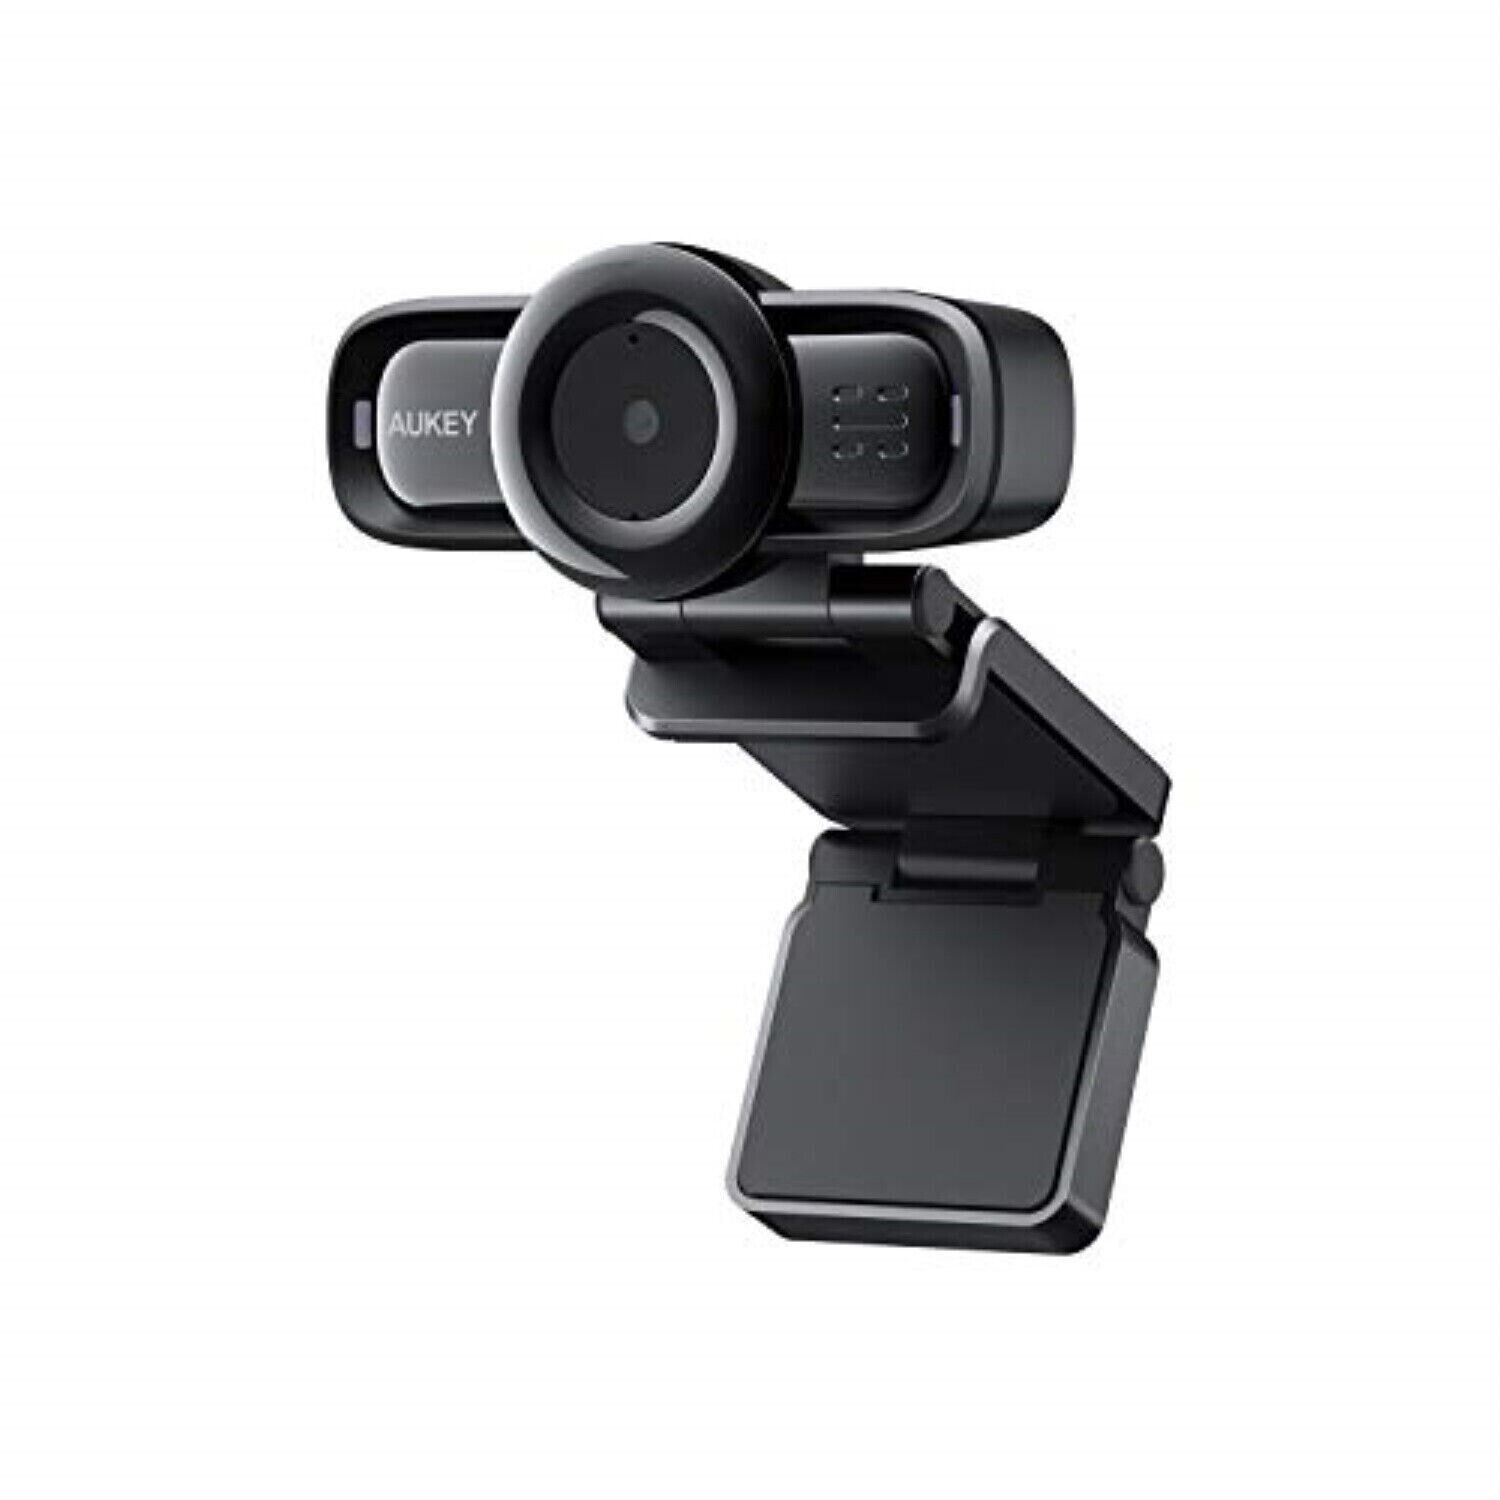 Webcam AUKEY 1080p Full HD with Autofocus, Noise Reduction PC-LM3